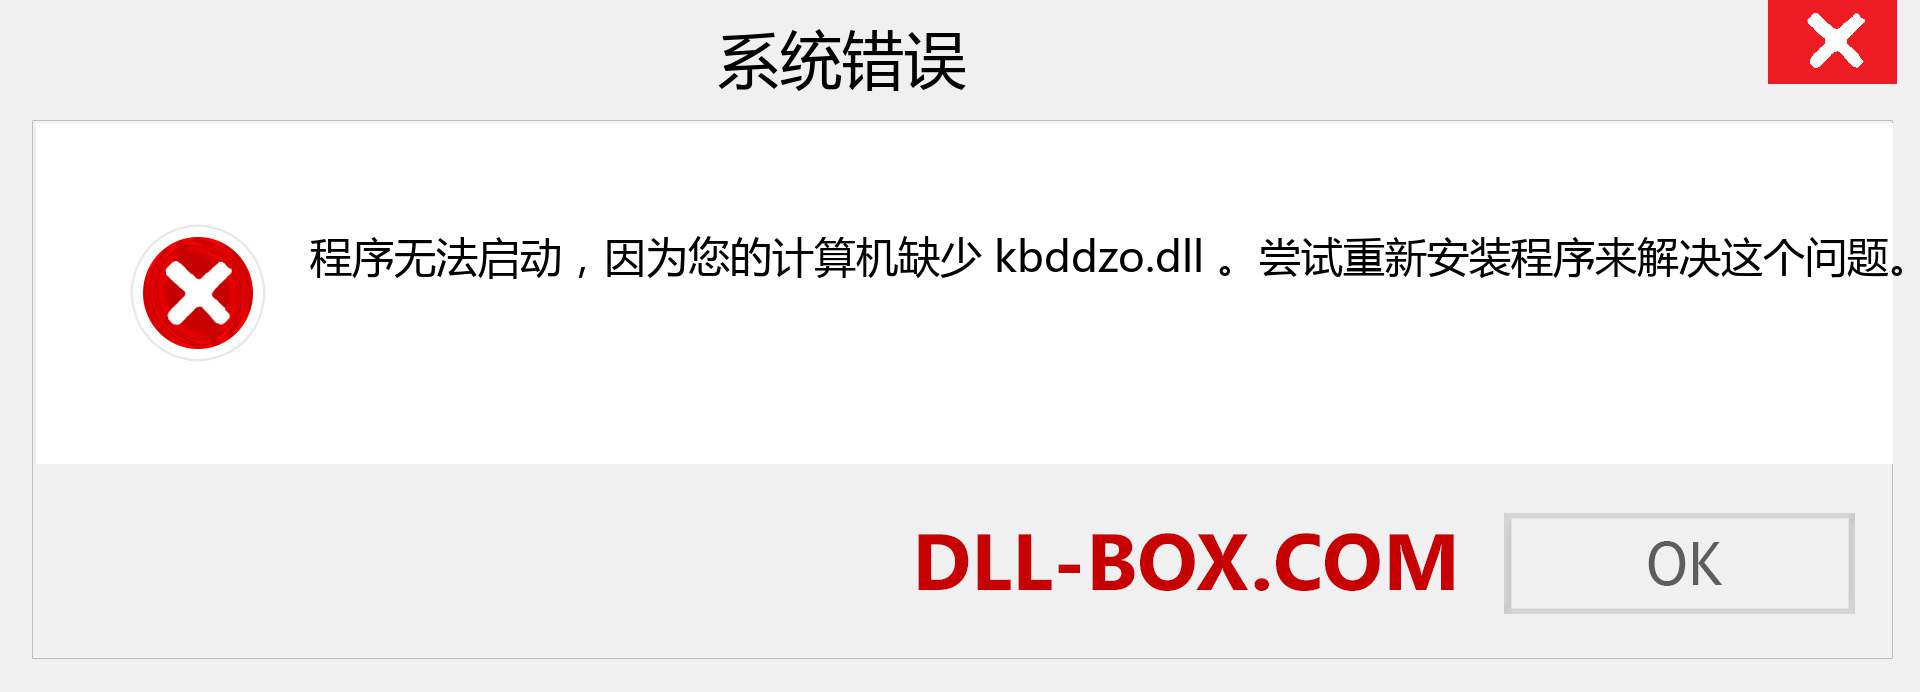 kbddzo.dll 文件丢失？。 适用于 Windows 7、8、10 的下载 - 修复 Windows、照片、图像上的 kbddzo dll 丢失错误